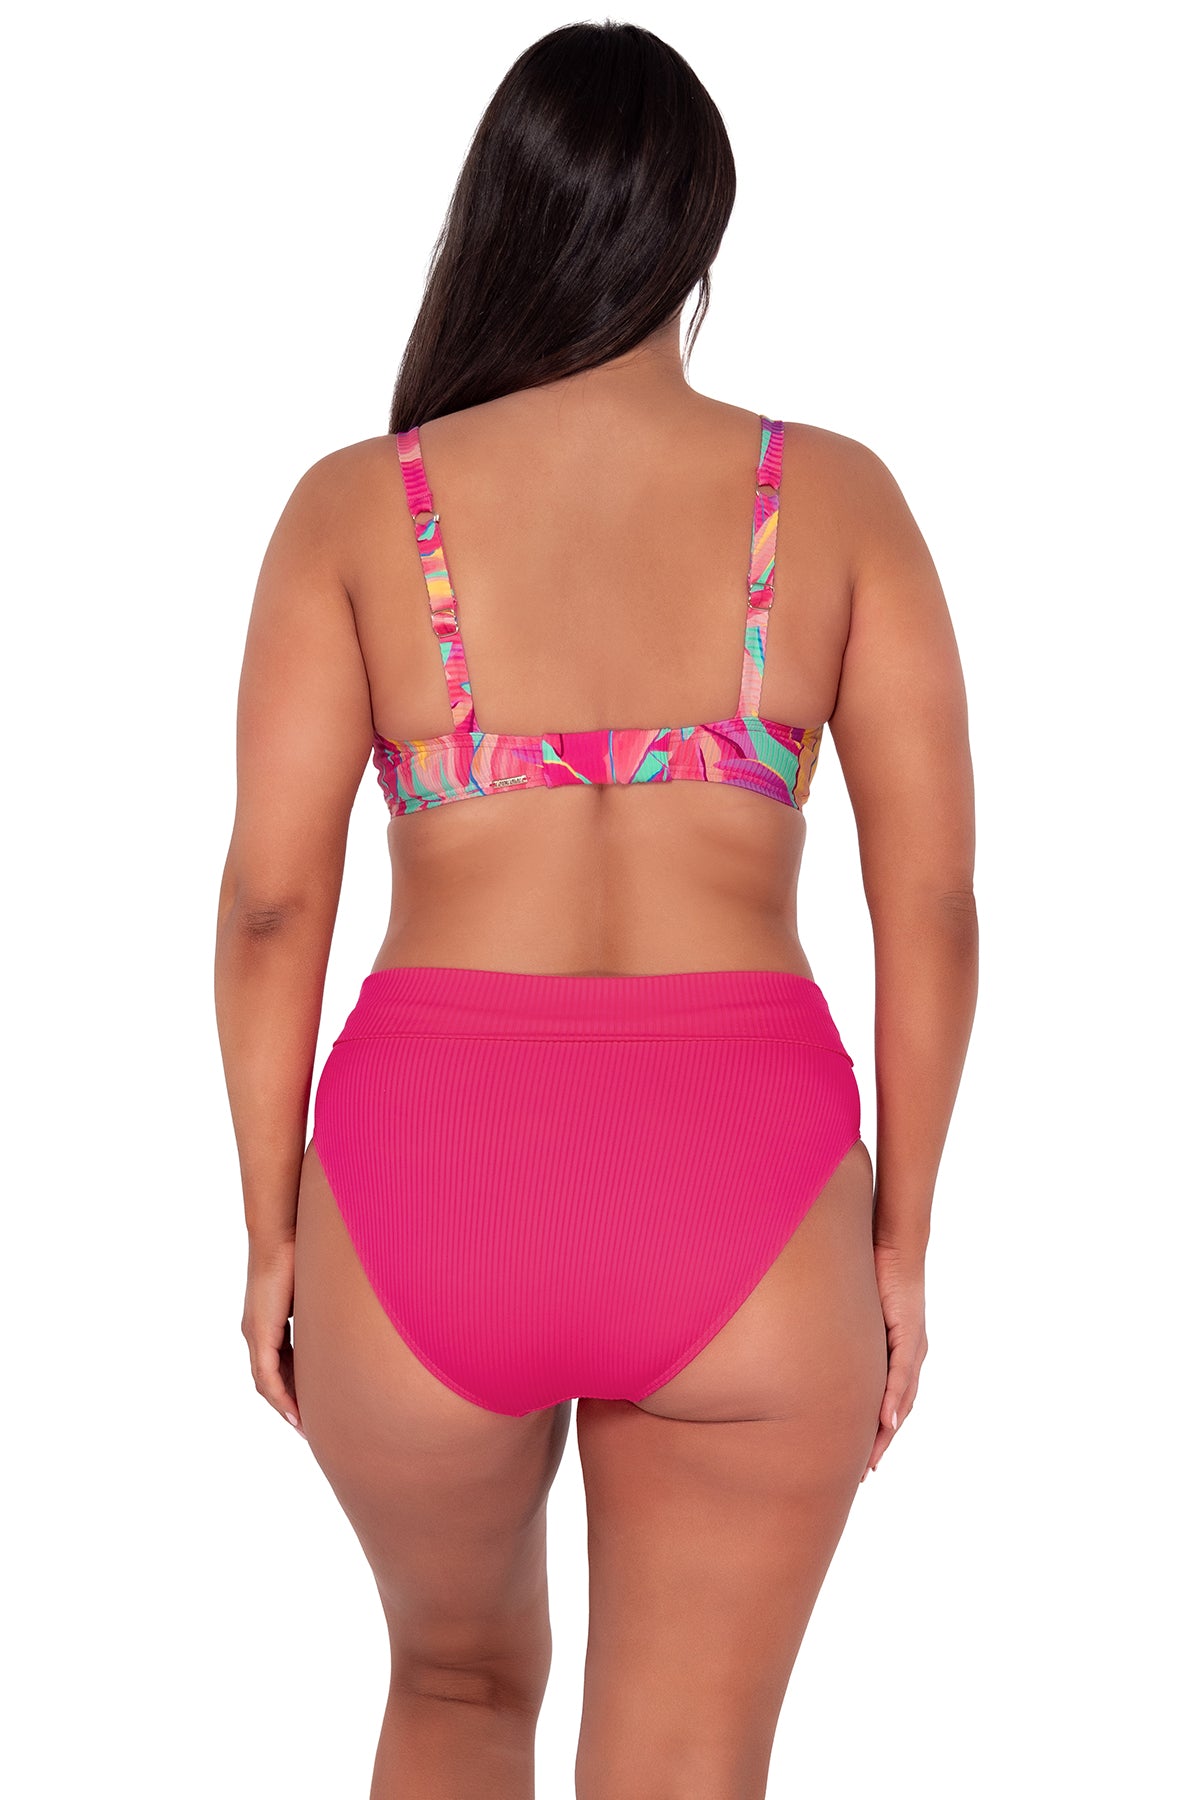 Back pose #1 of Nicki wearing Sunsets Oasis Sandbar Rib Kauai Keyhole Top paired with Hannah High Waist bikini bottom showing folded waist